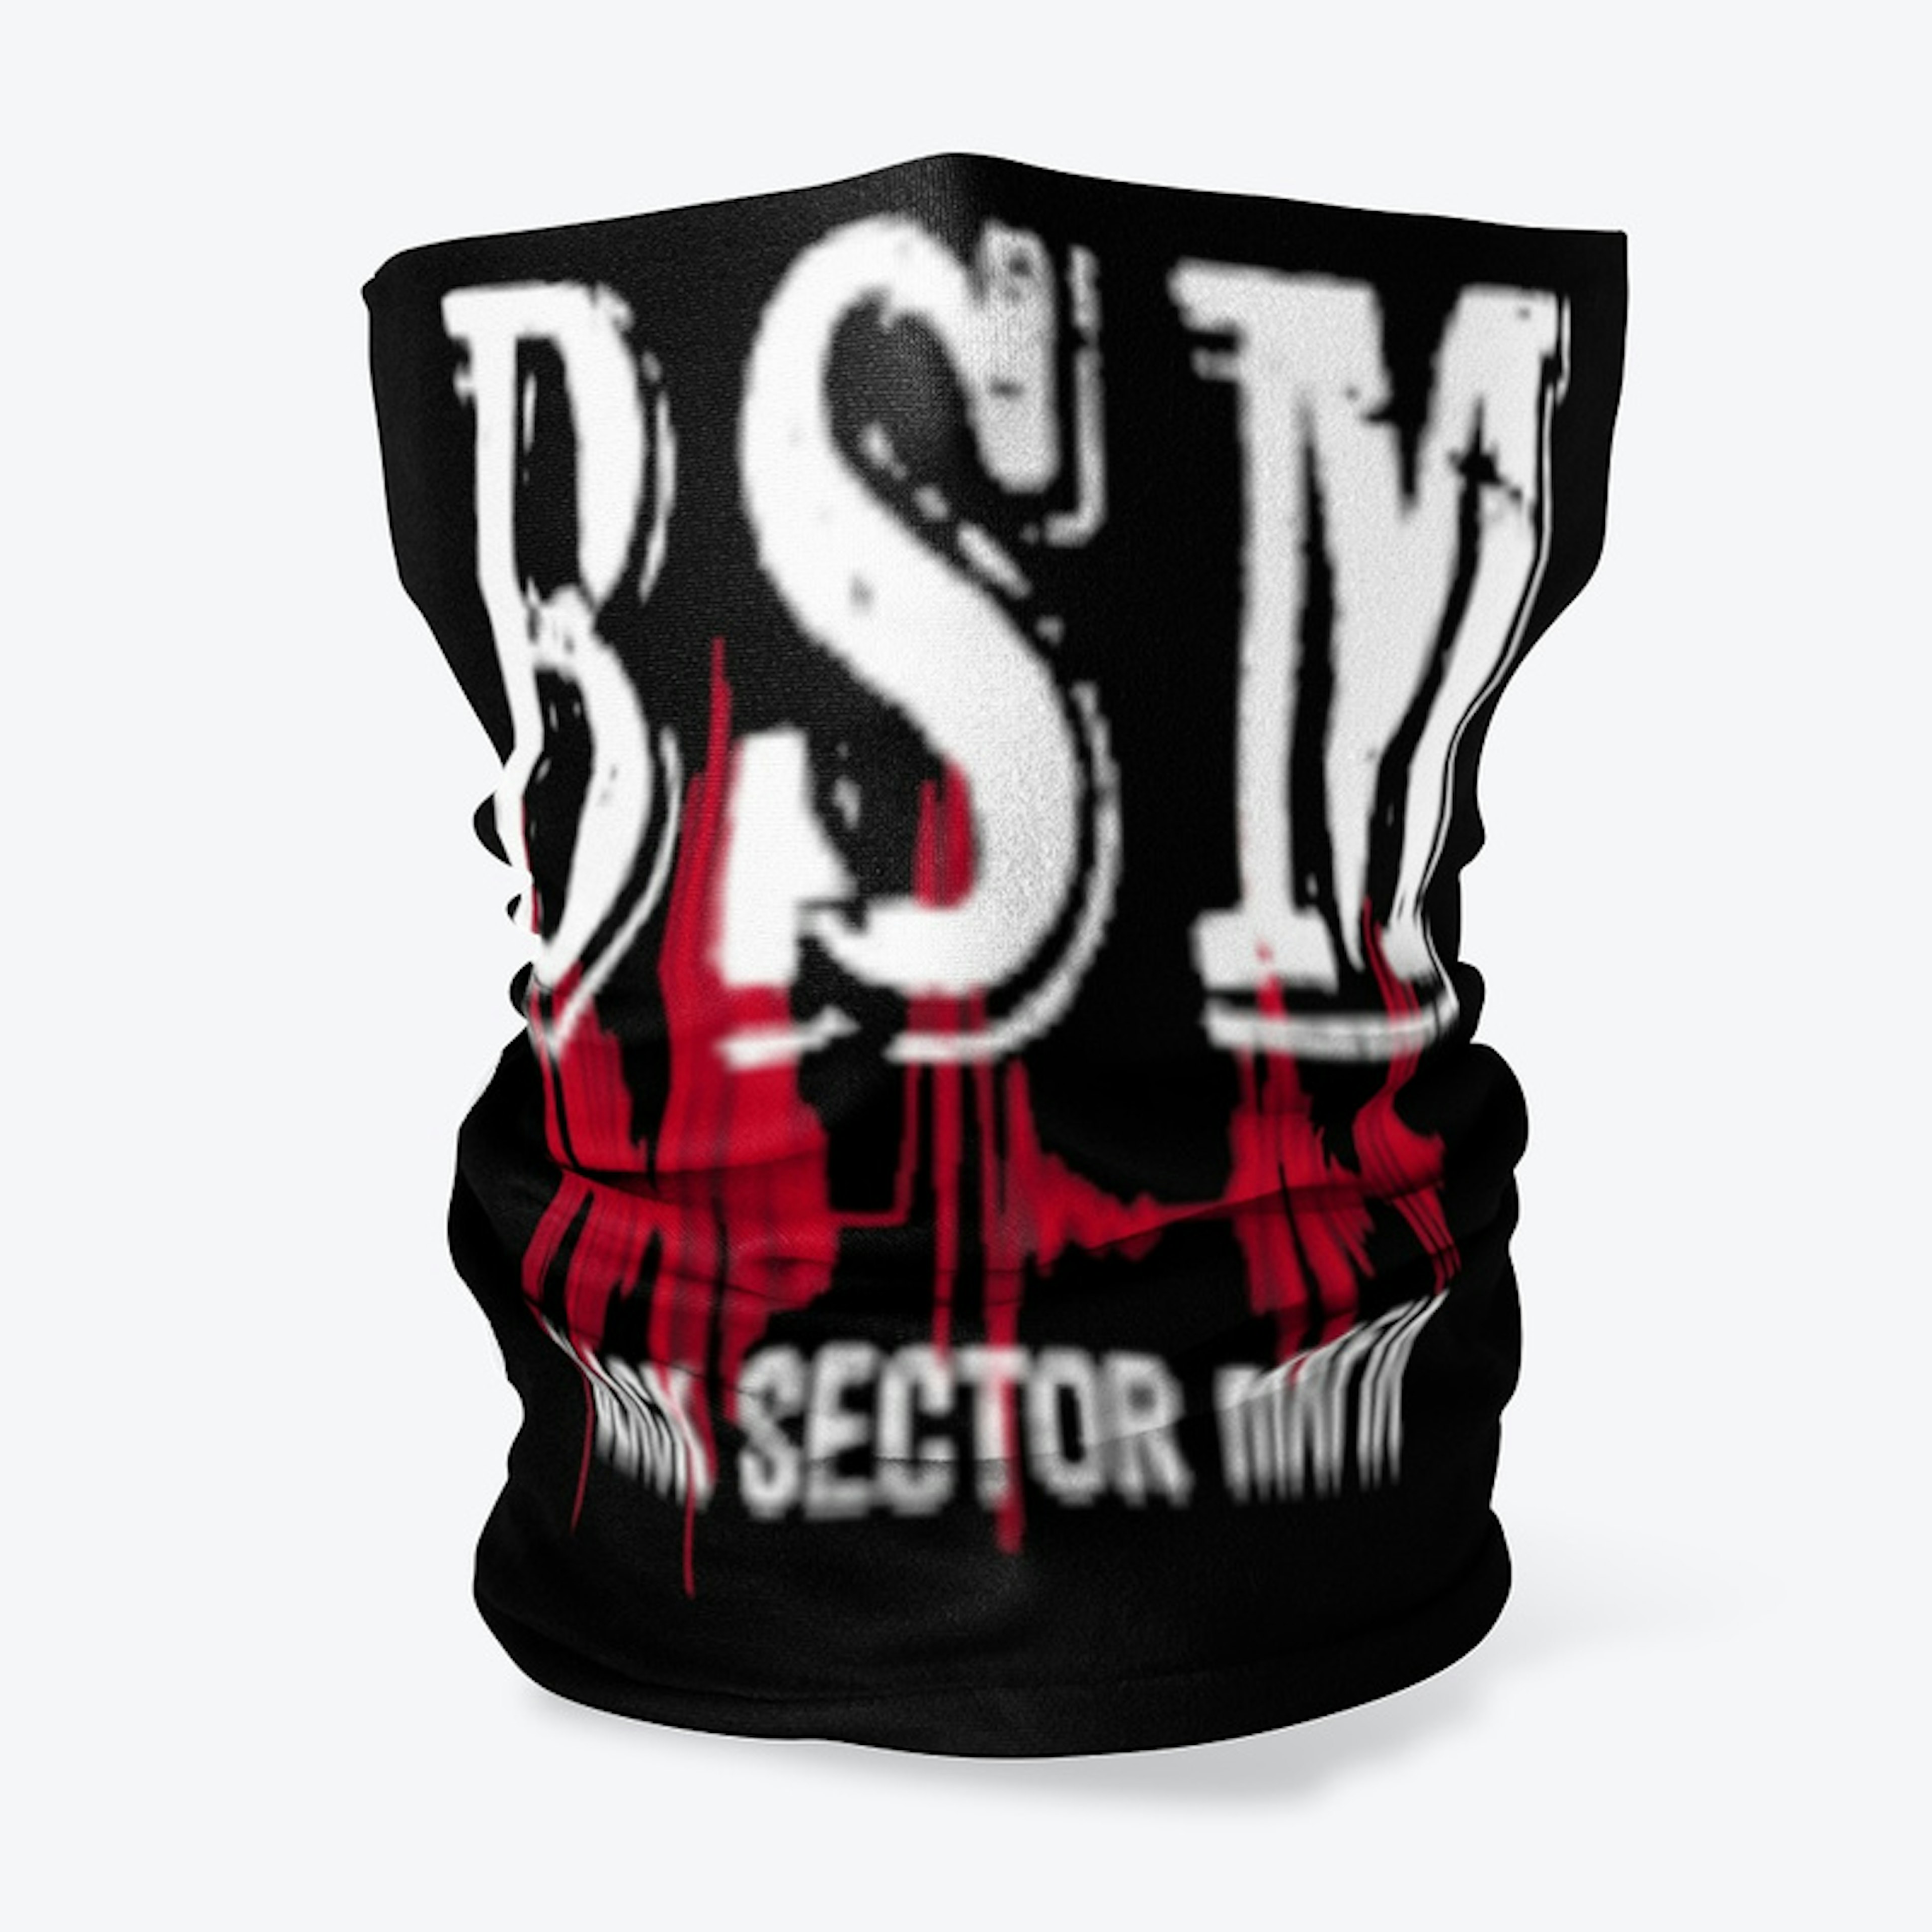 Exclusive BLACK SECTOR MAFIA (BSM) Merch